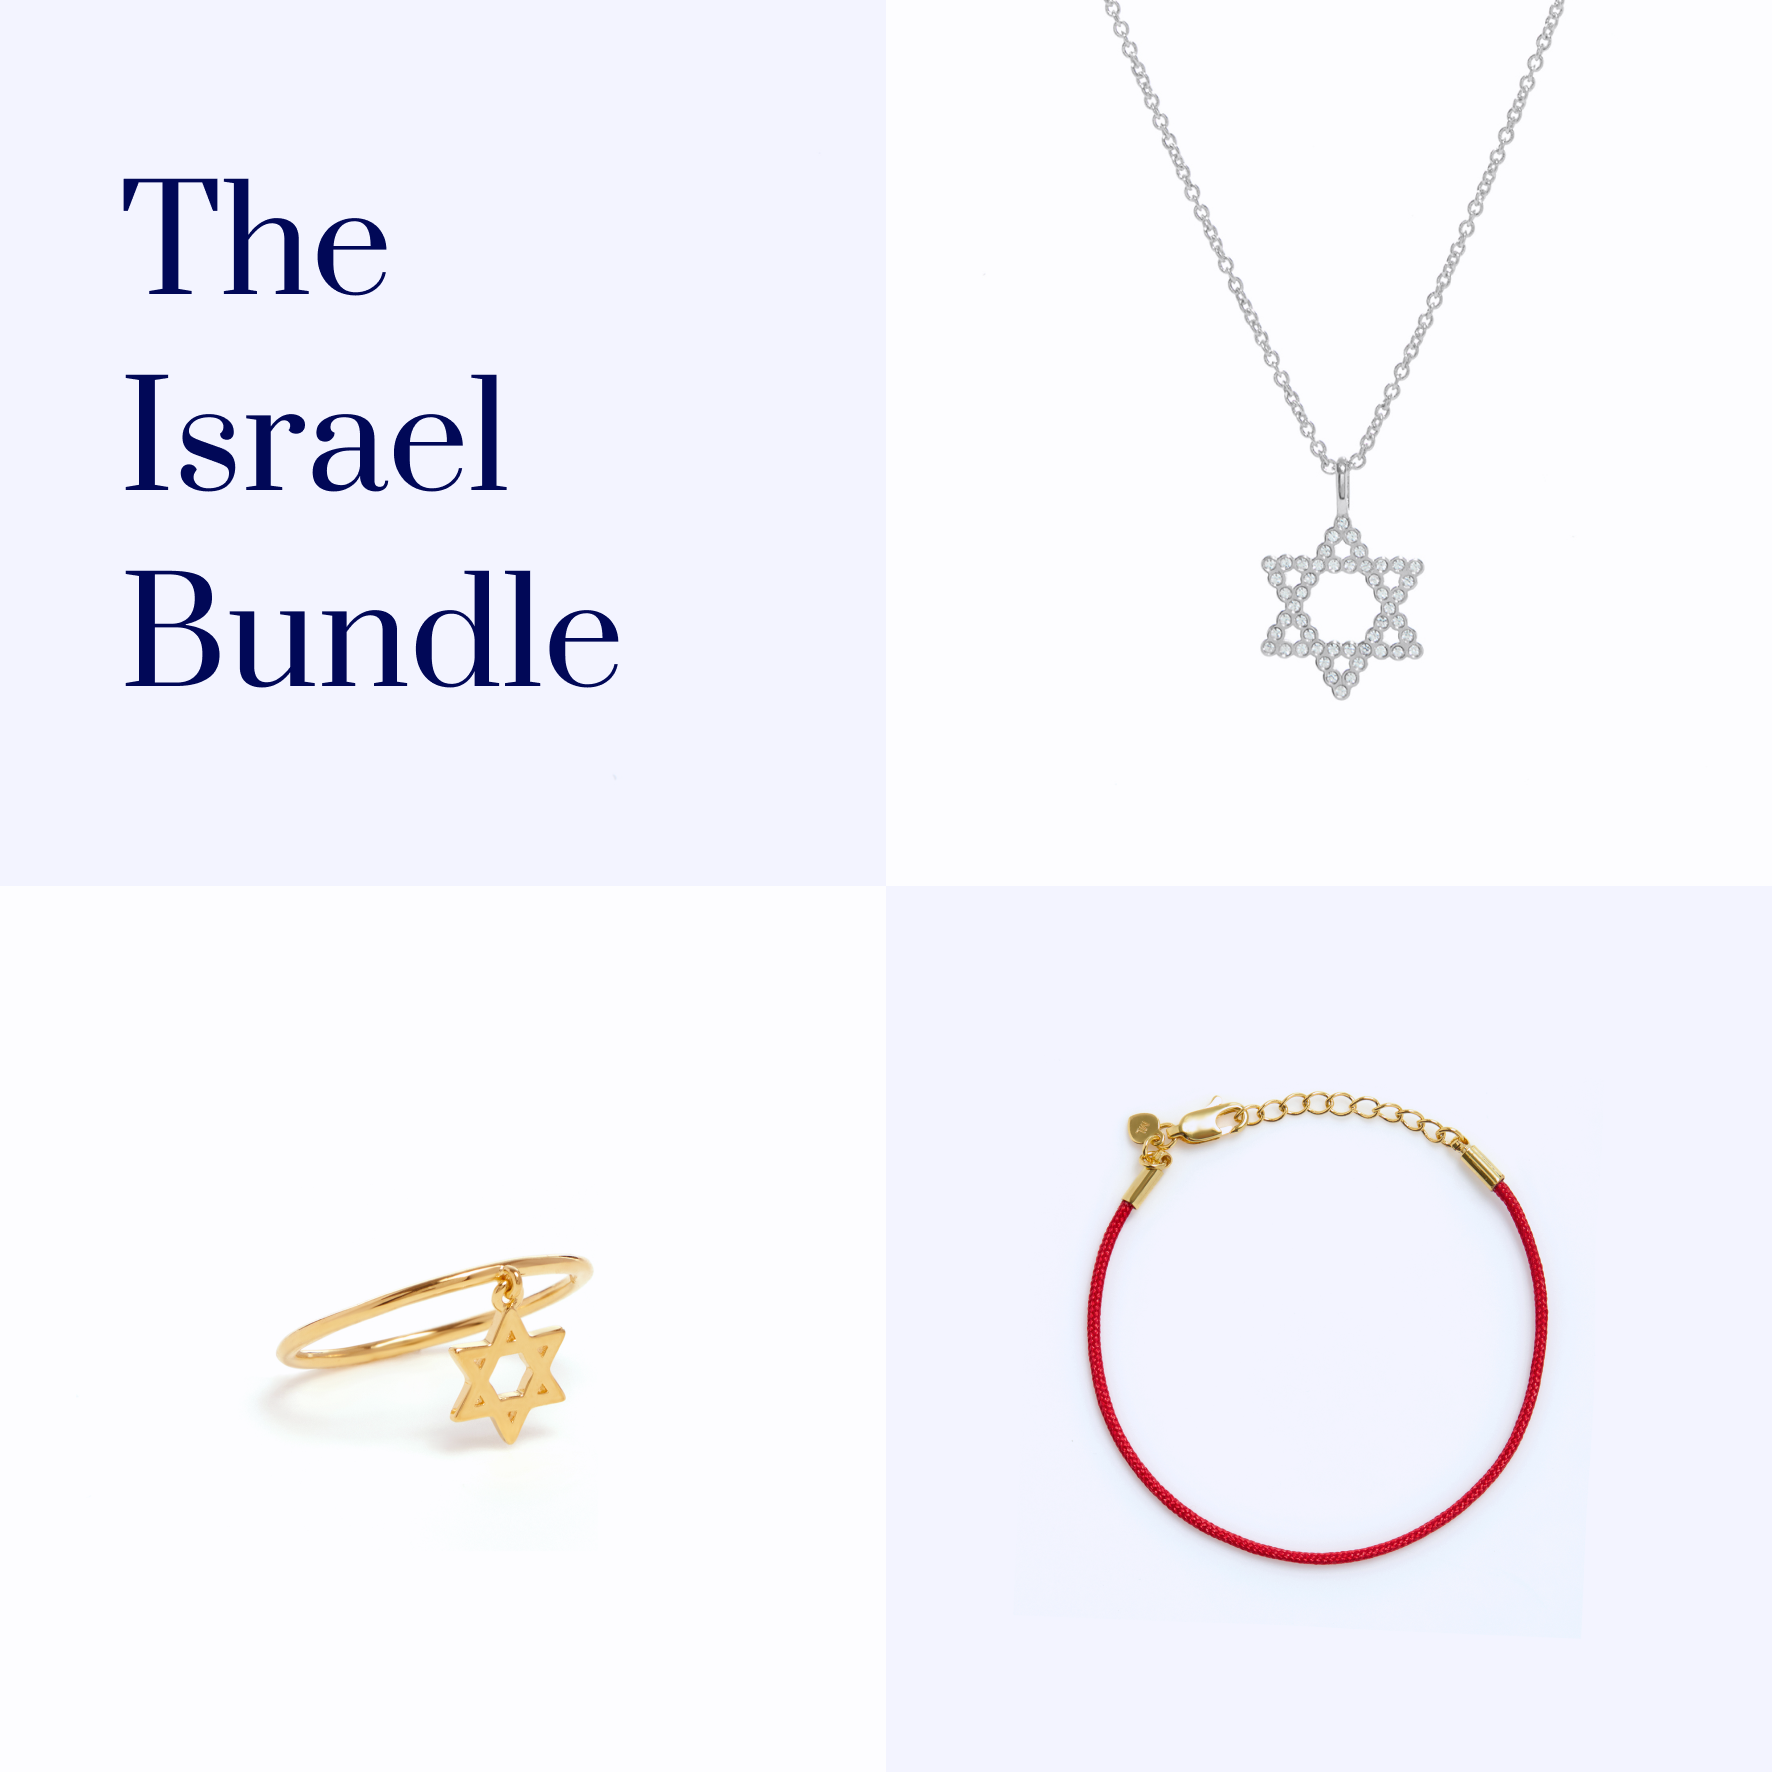 The Israel Bundle